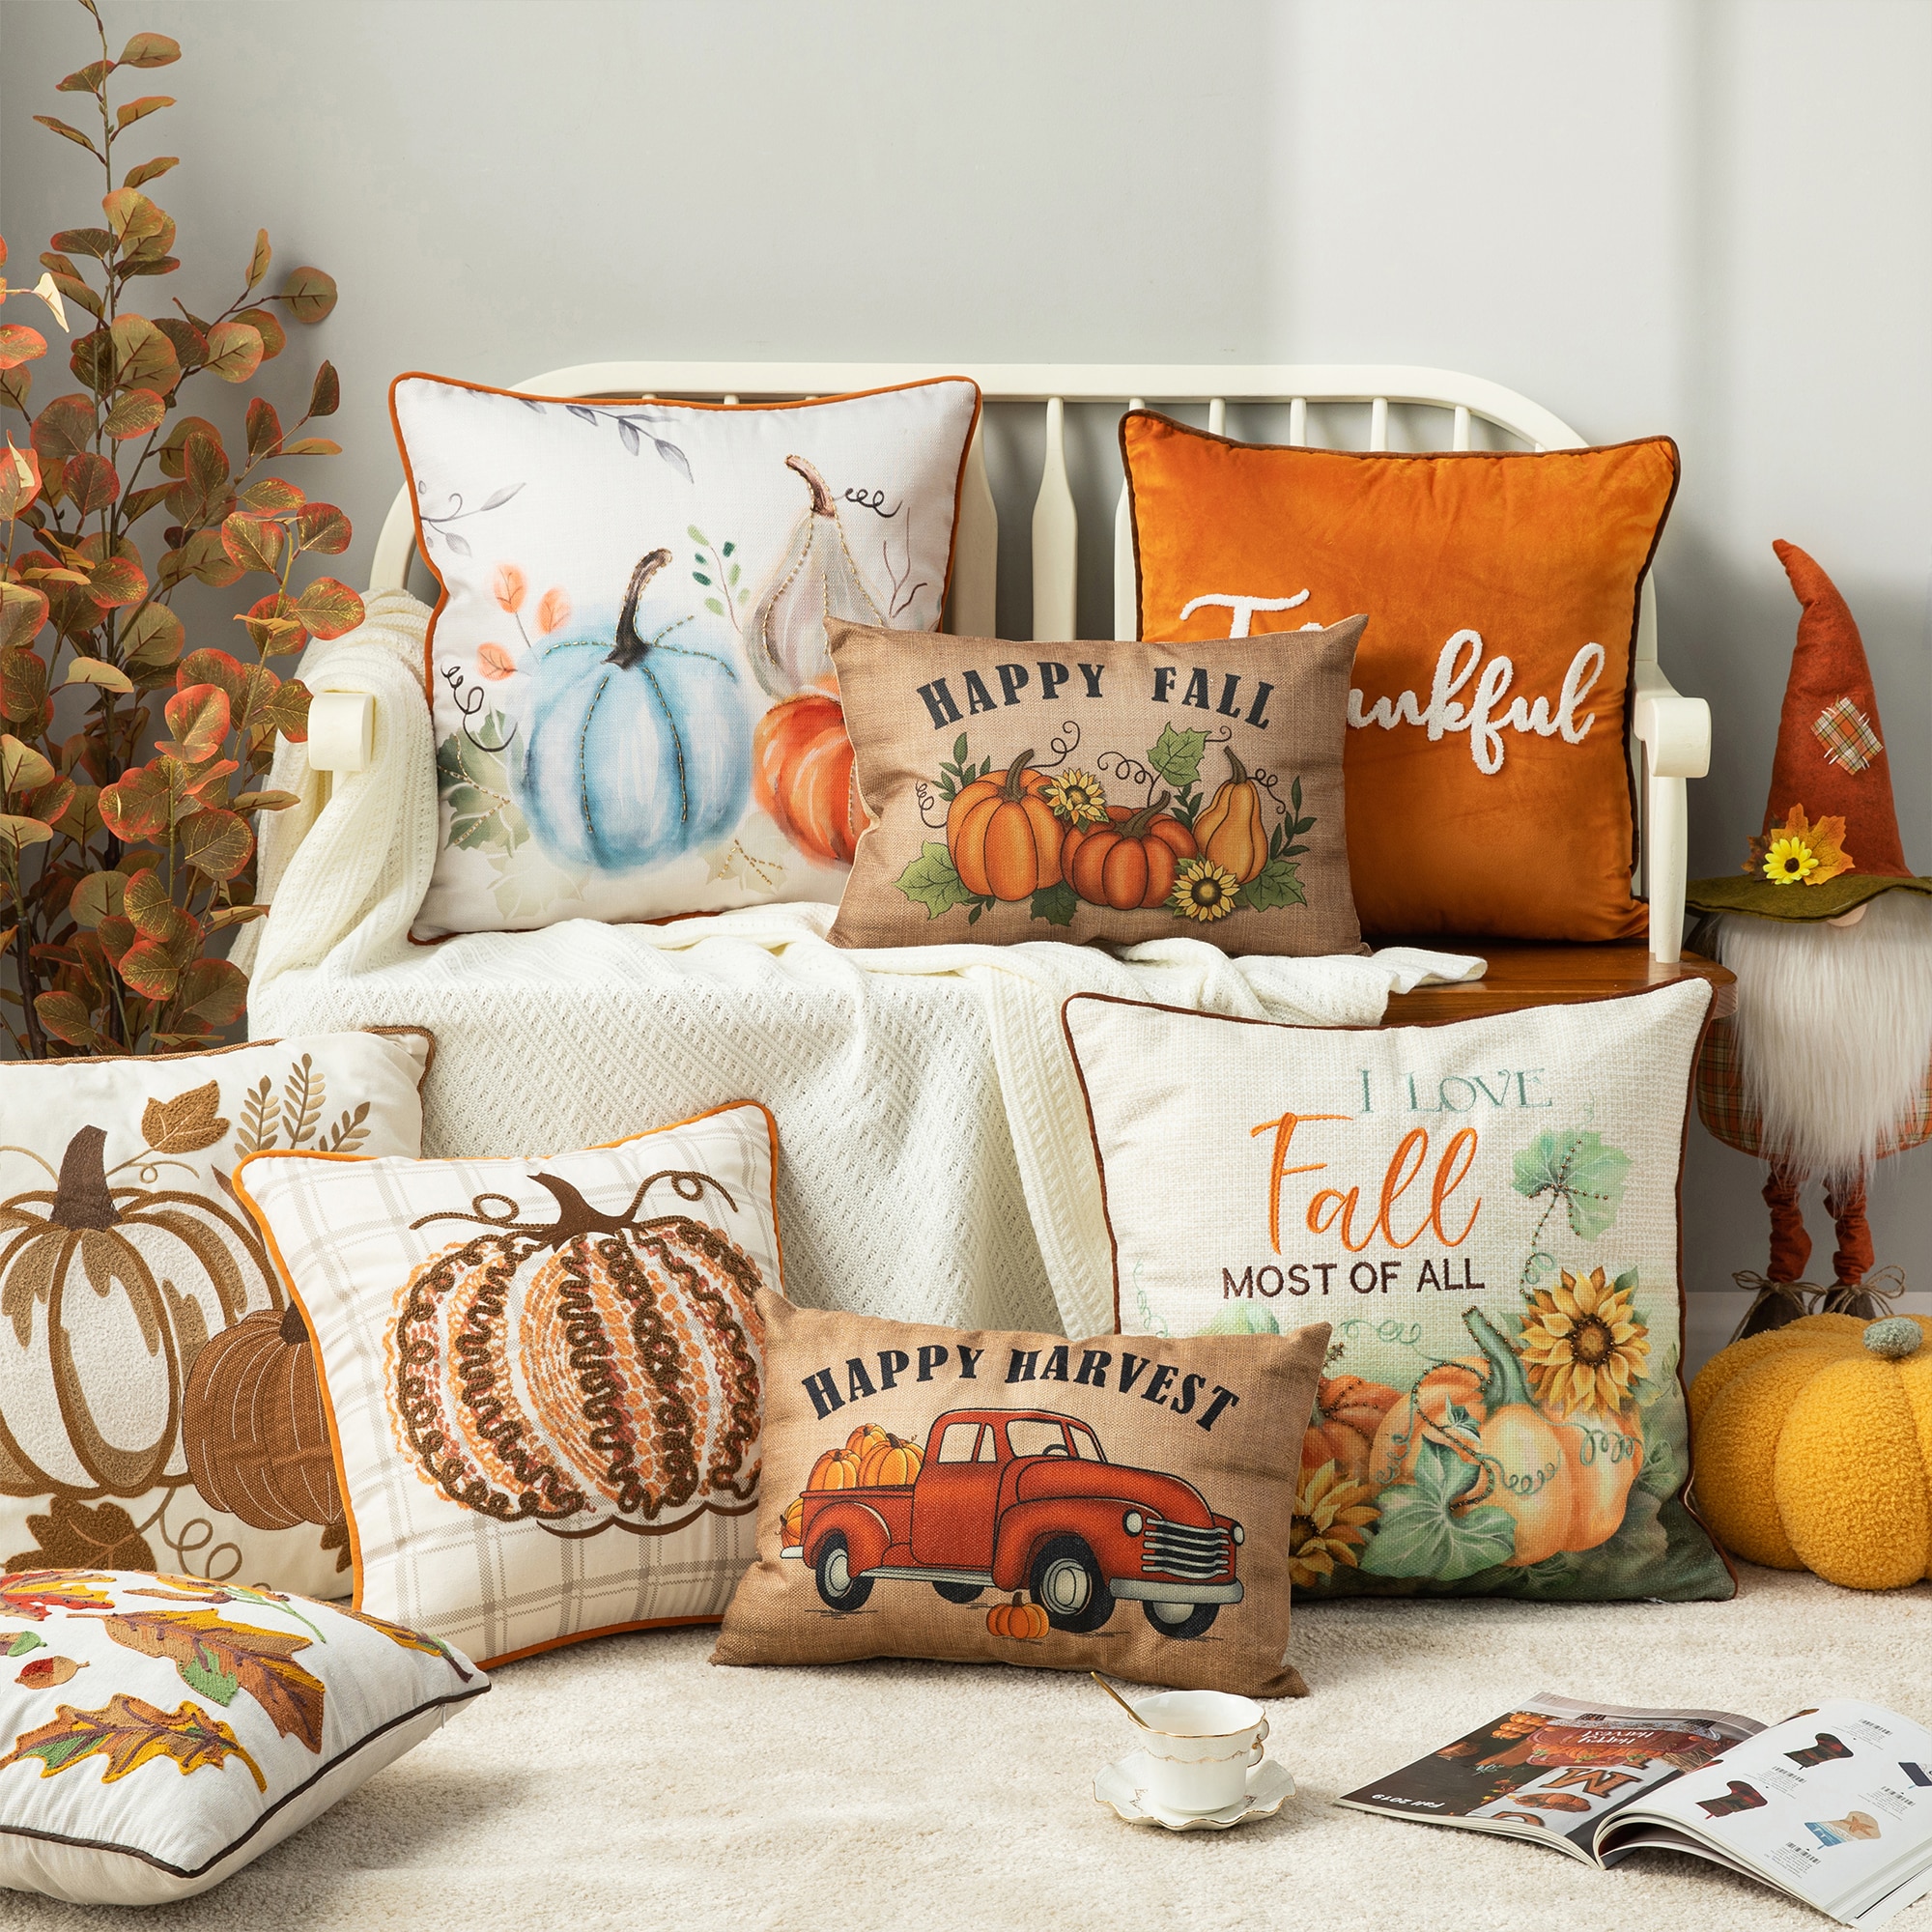 Market Pumpkin Throw Pillow Cover 18” x 18” – Ole Homestead